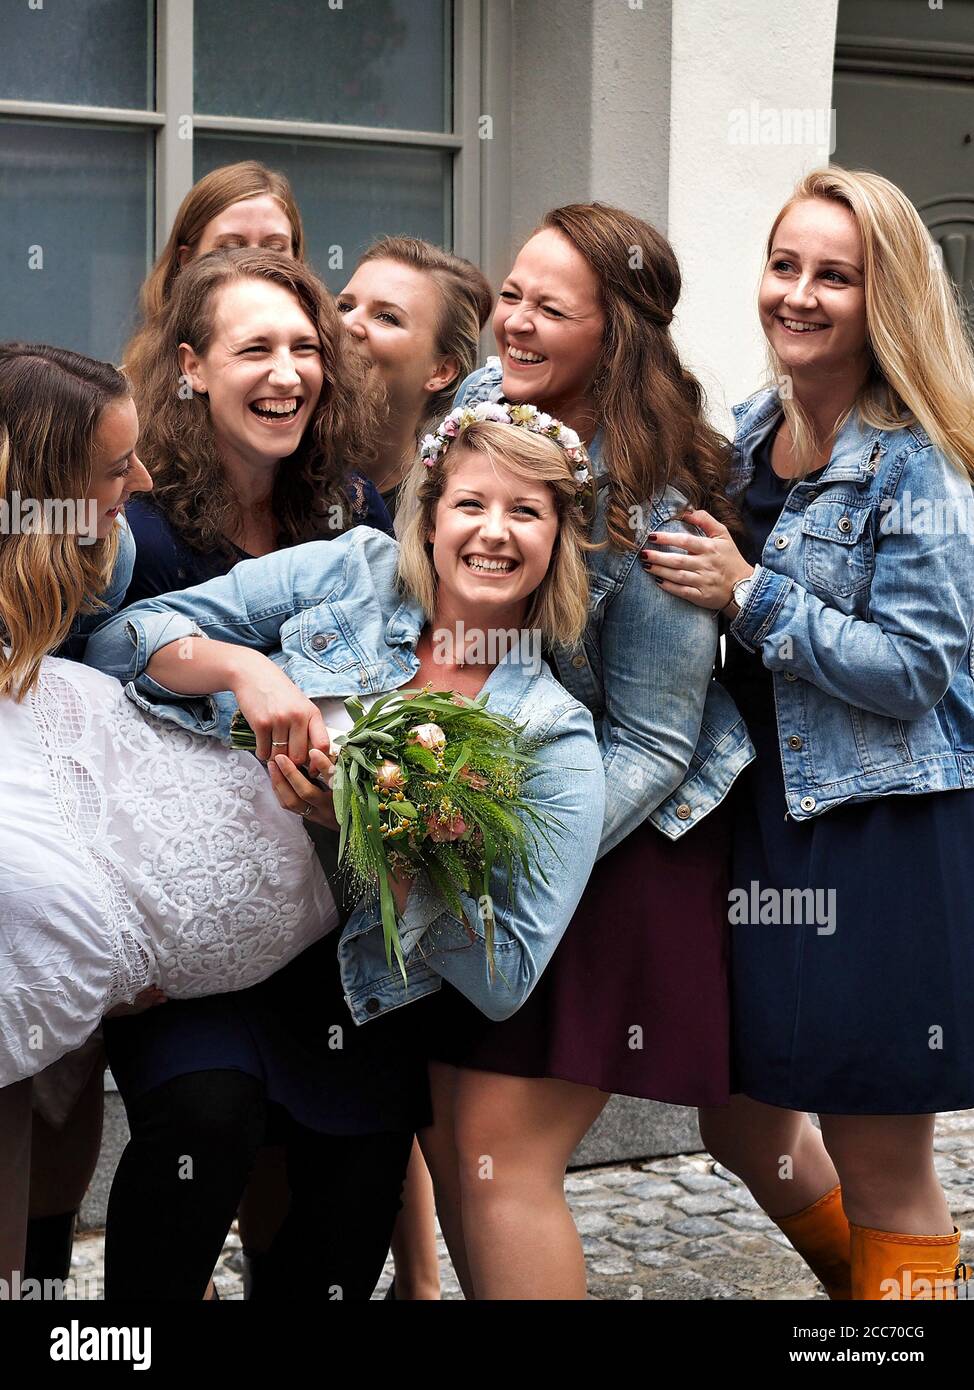 GUMPOLDSKIRCHEN, AUSTRIA - 09/01/2018. Happy caucasian bride among laughing bridesmaids. Stock Photo